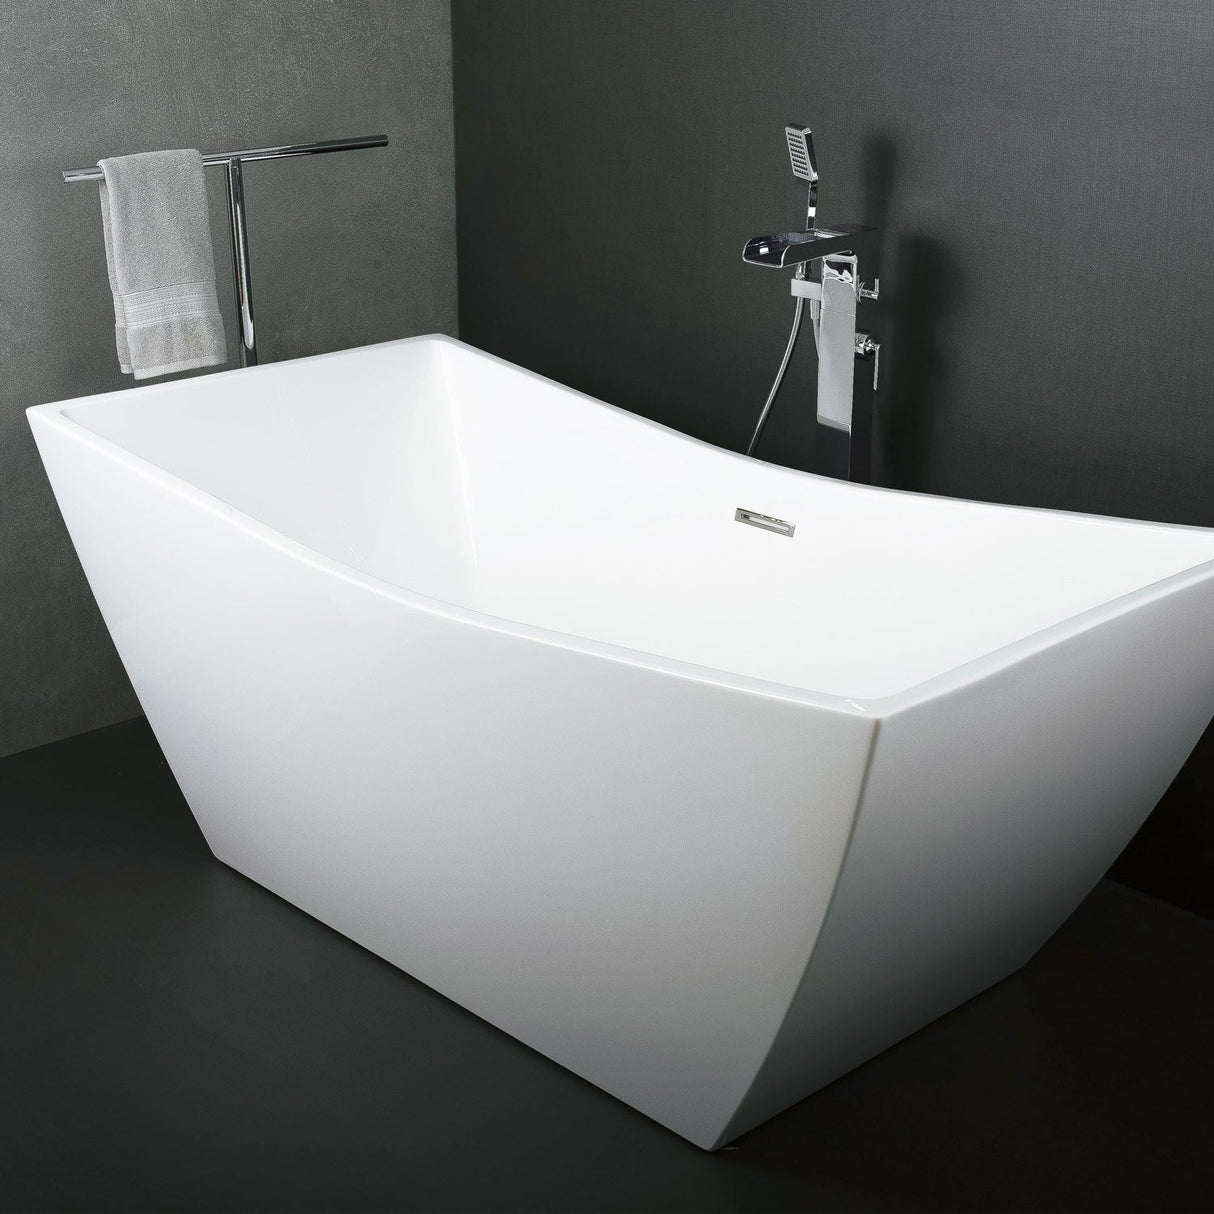 DAX Acrylic Square Freestanding Bathtub, White BT-8086